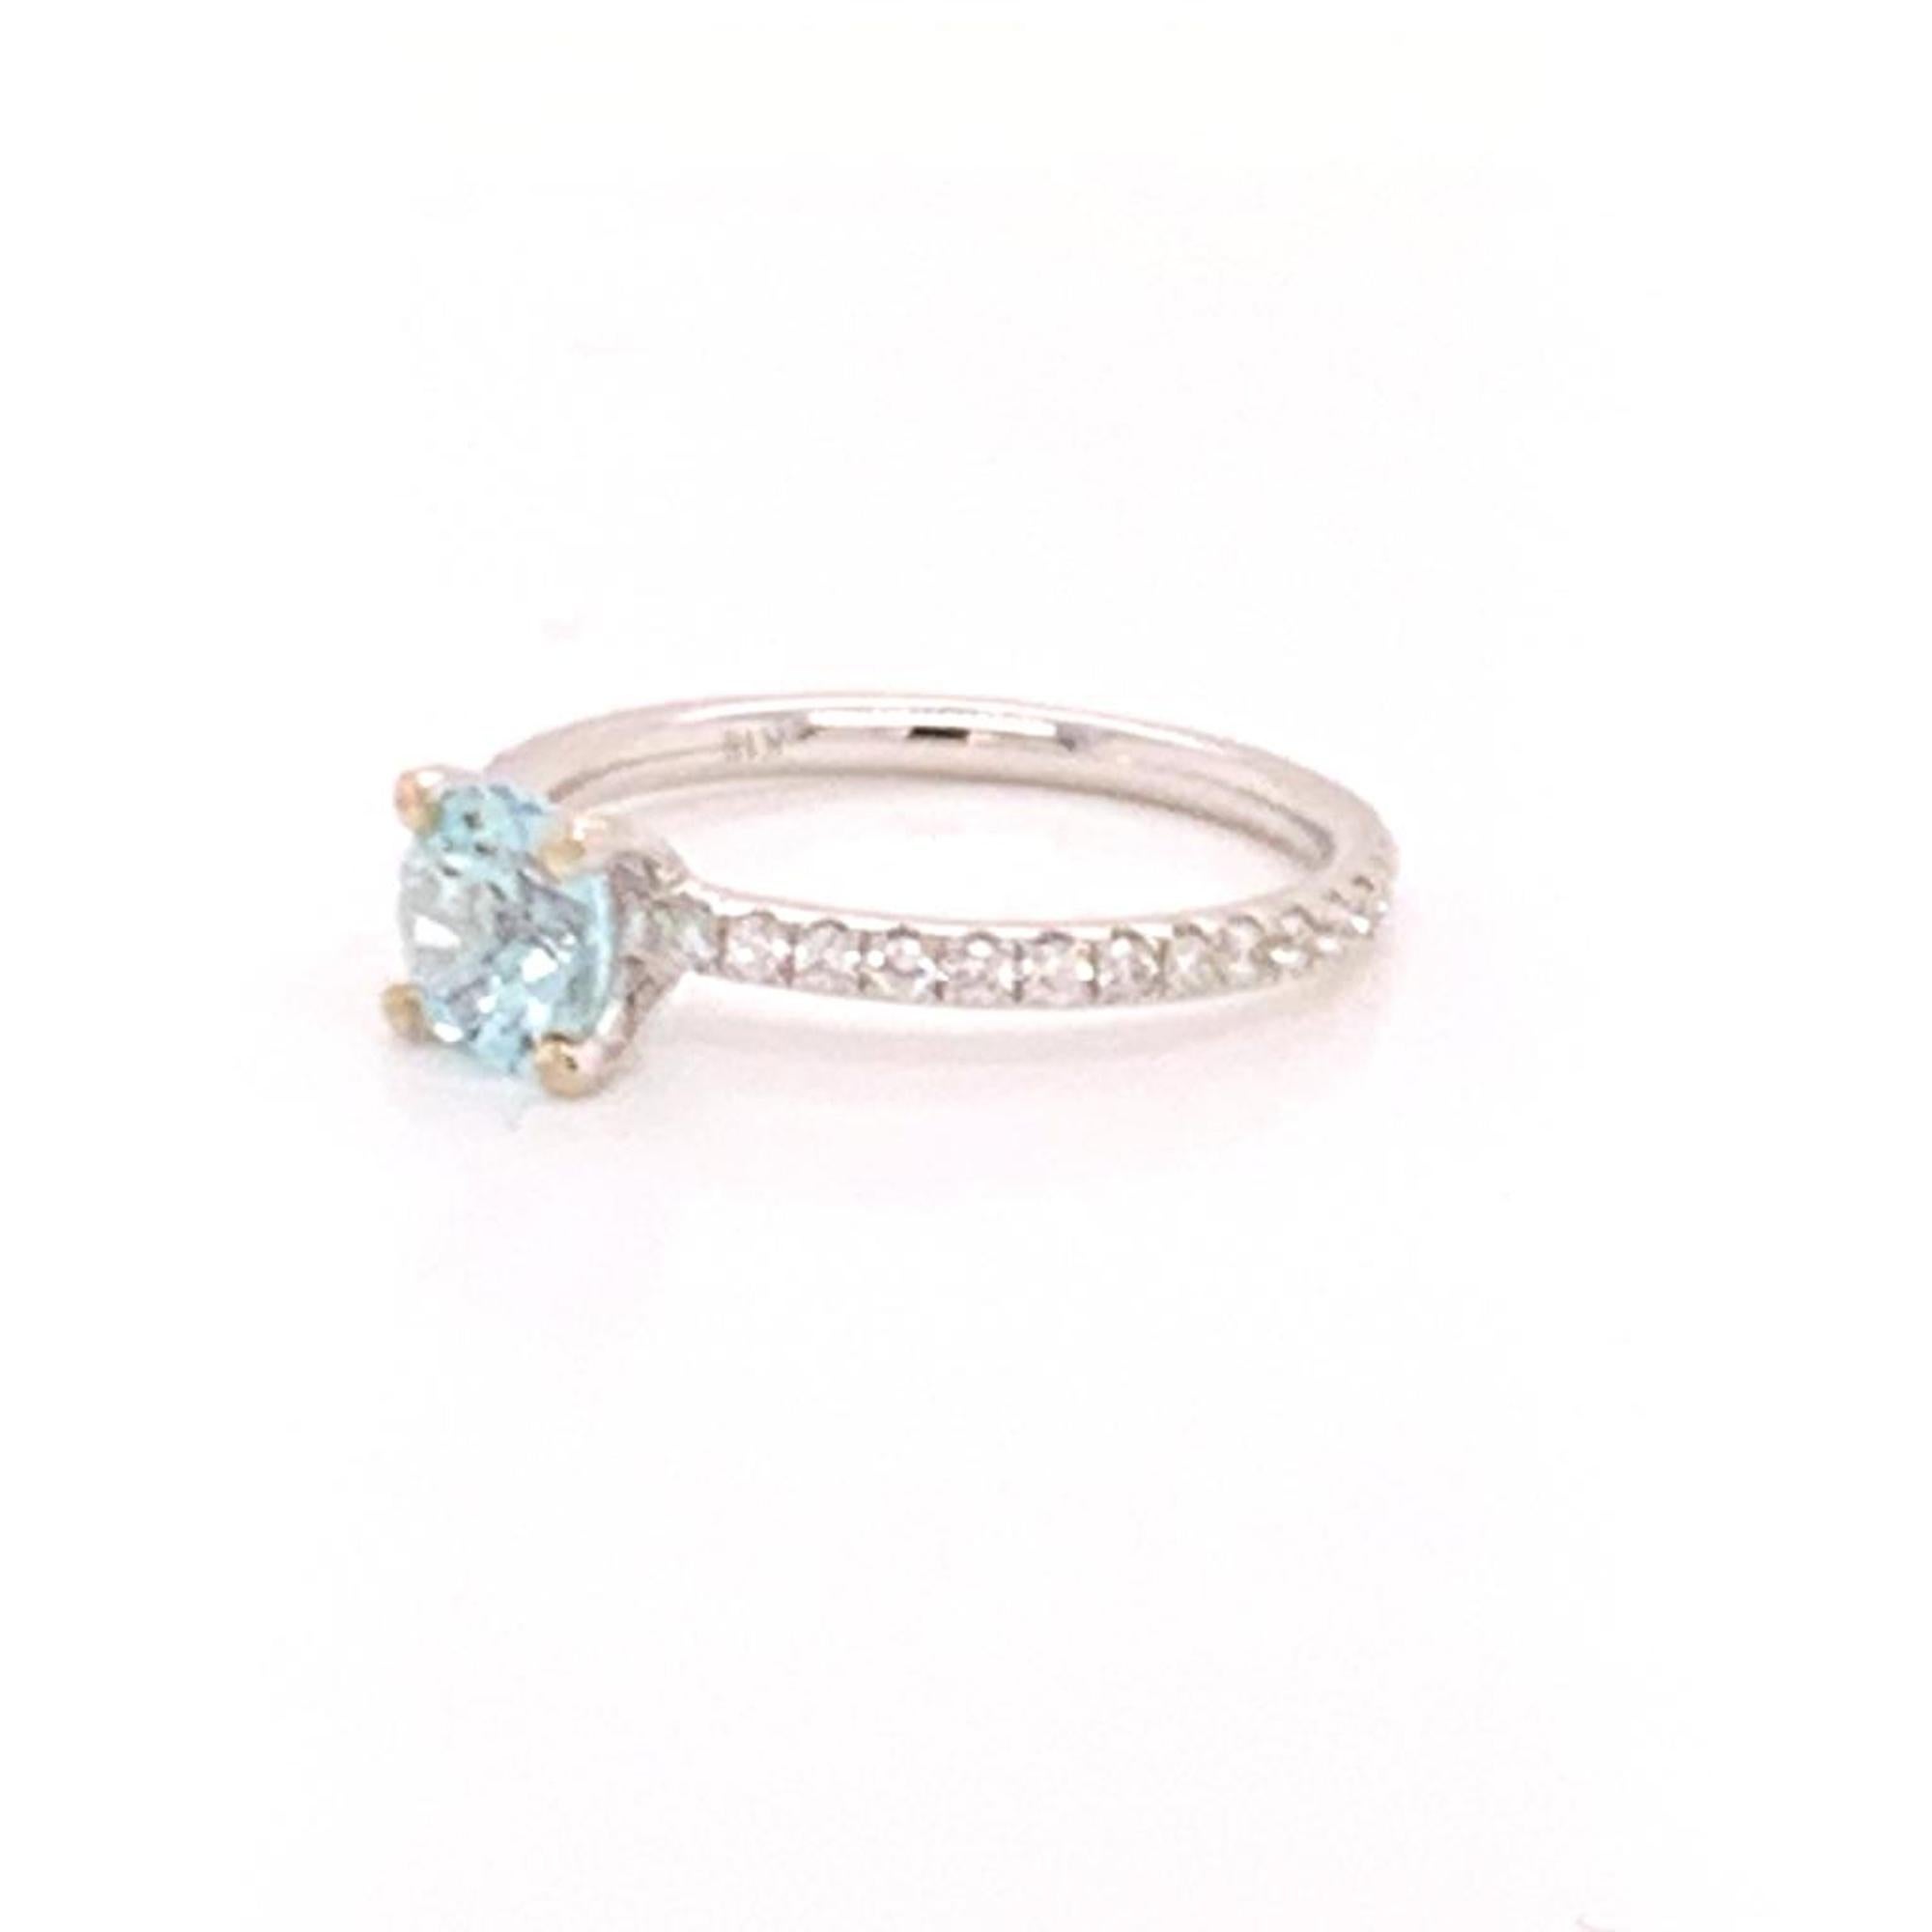 Round Cut Diamond Aquamarine Ring 18k White Gold 1.08 TCW Certified For Sale